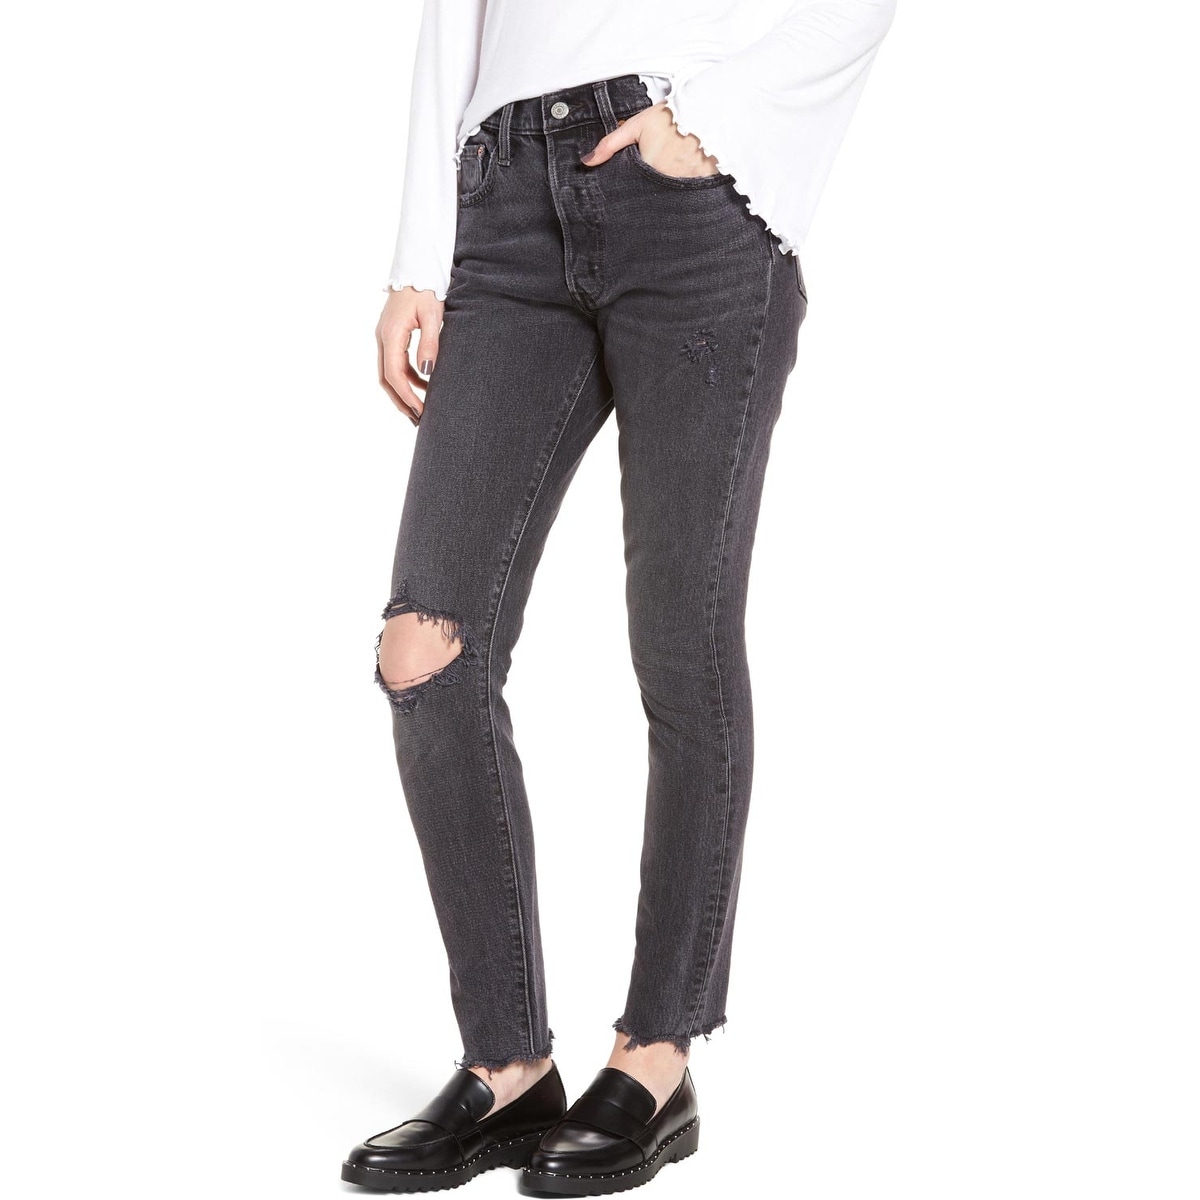 women's black levi jeans